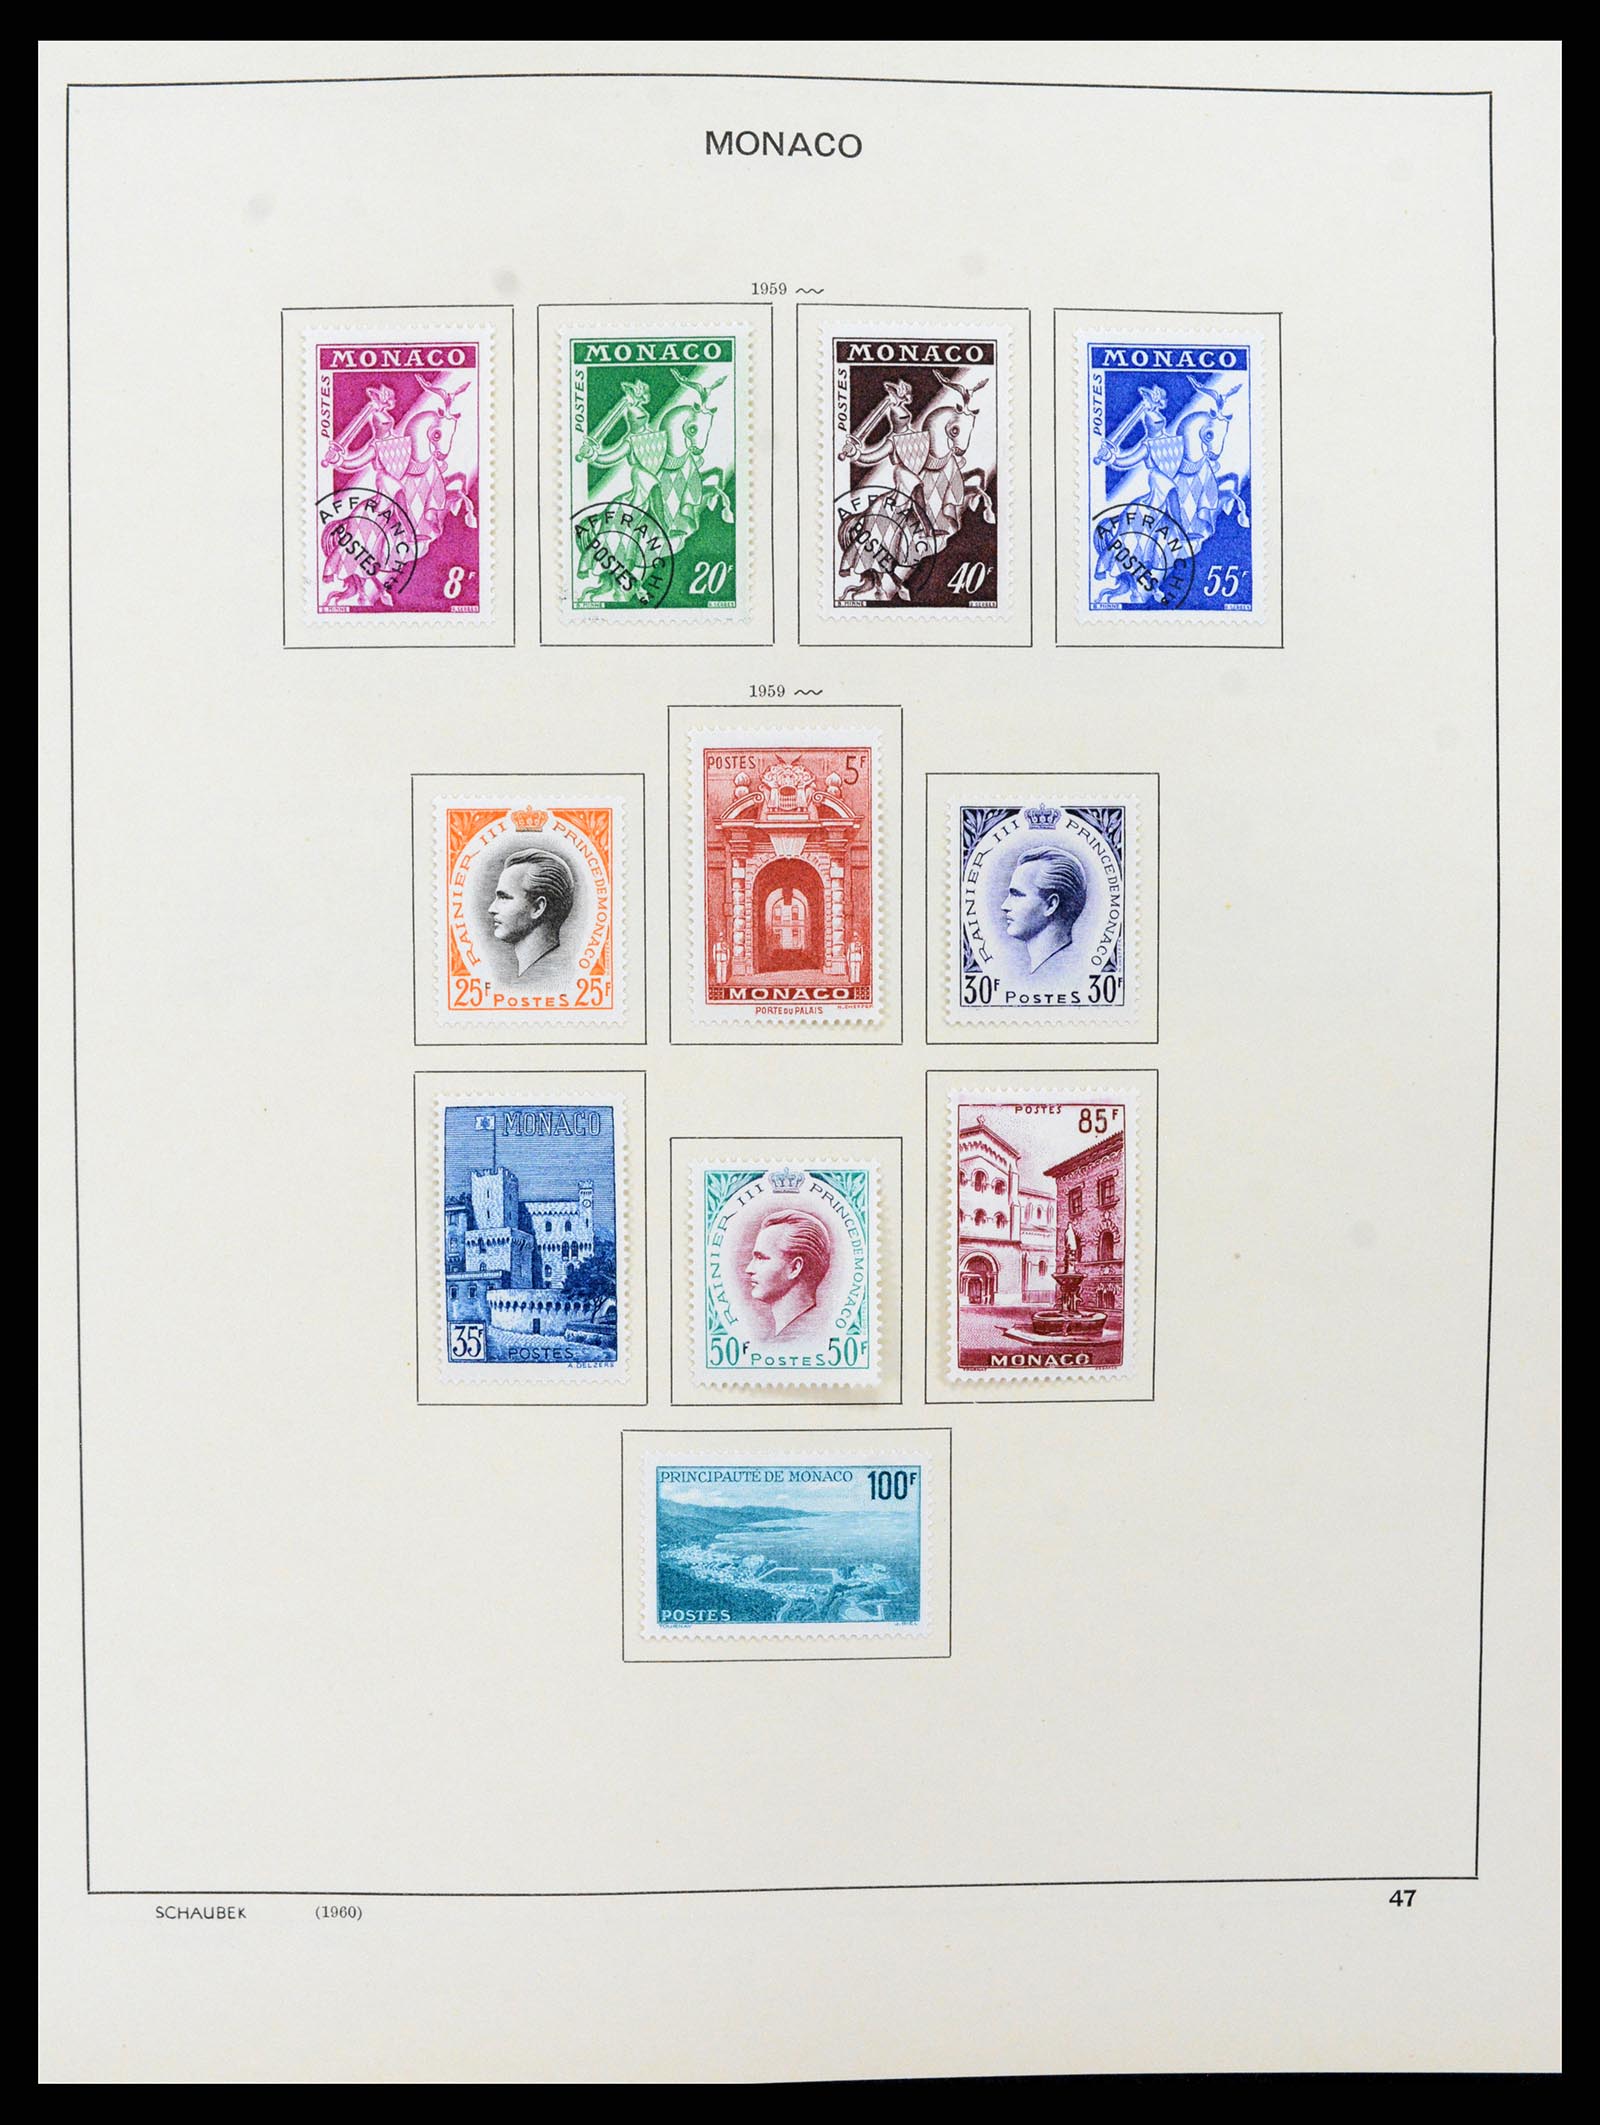 37570 054 - Stamp collection 37570 Monaco 1885-2013.